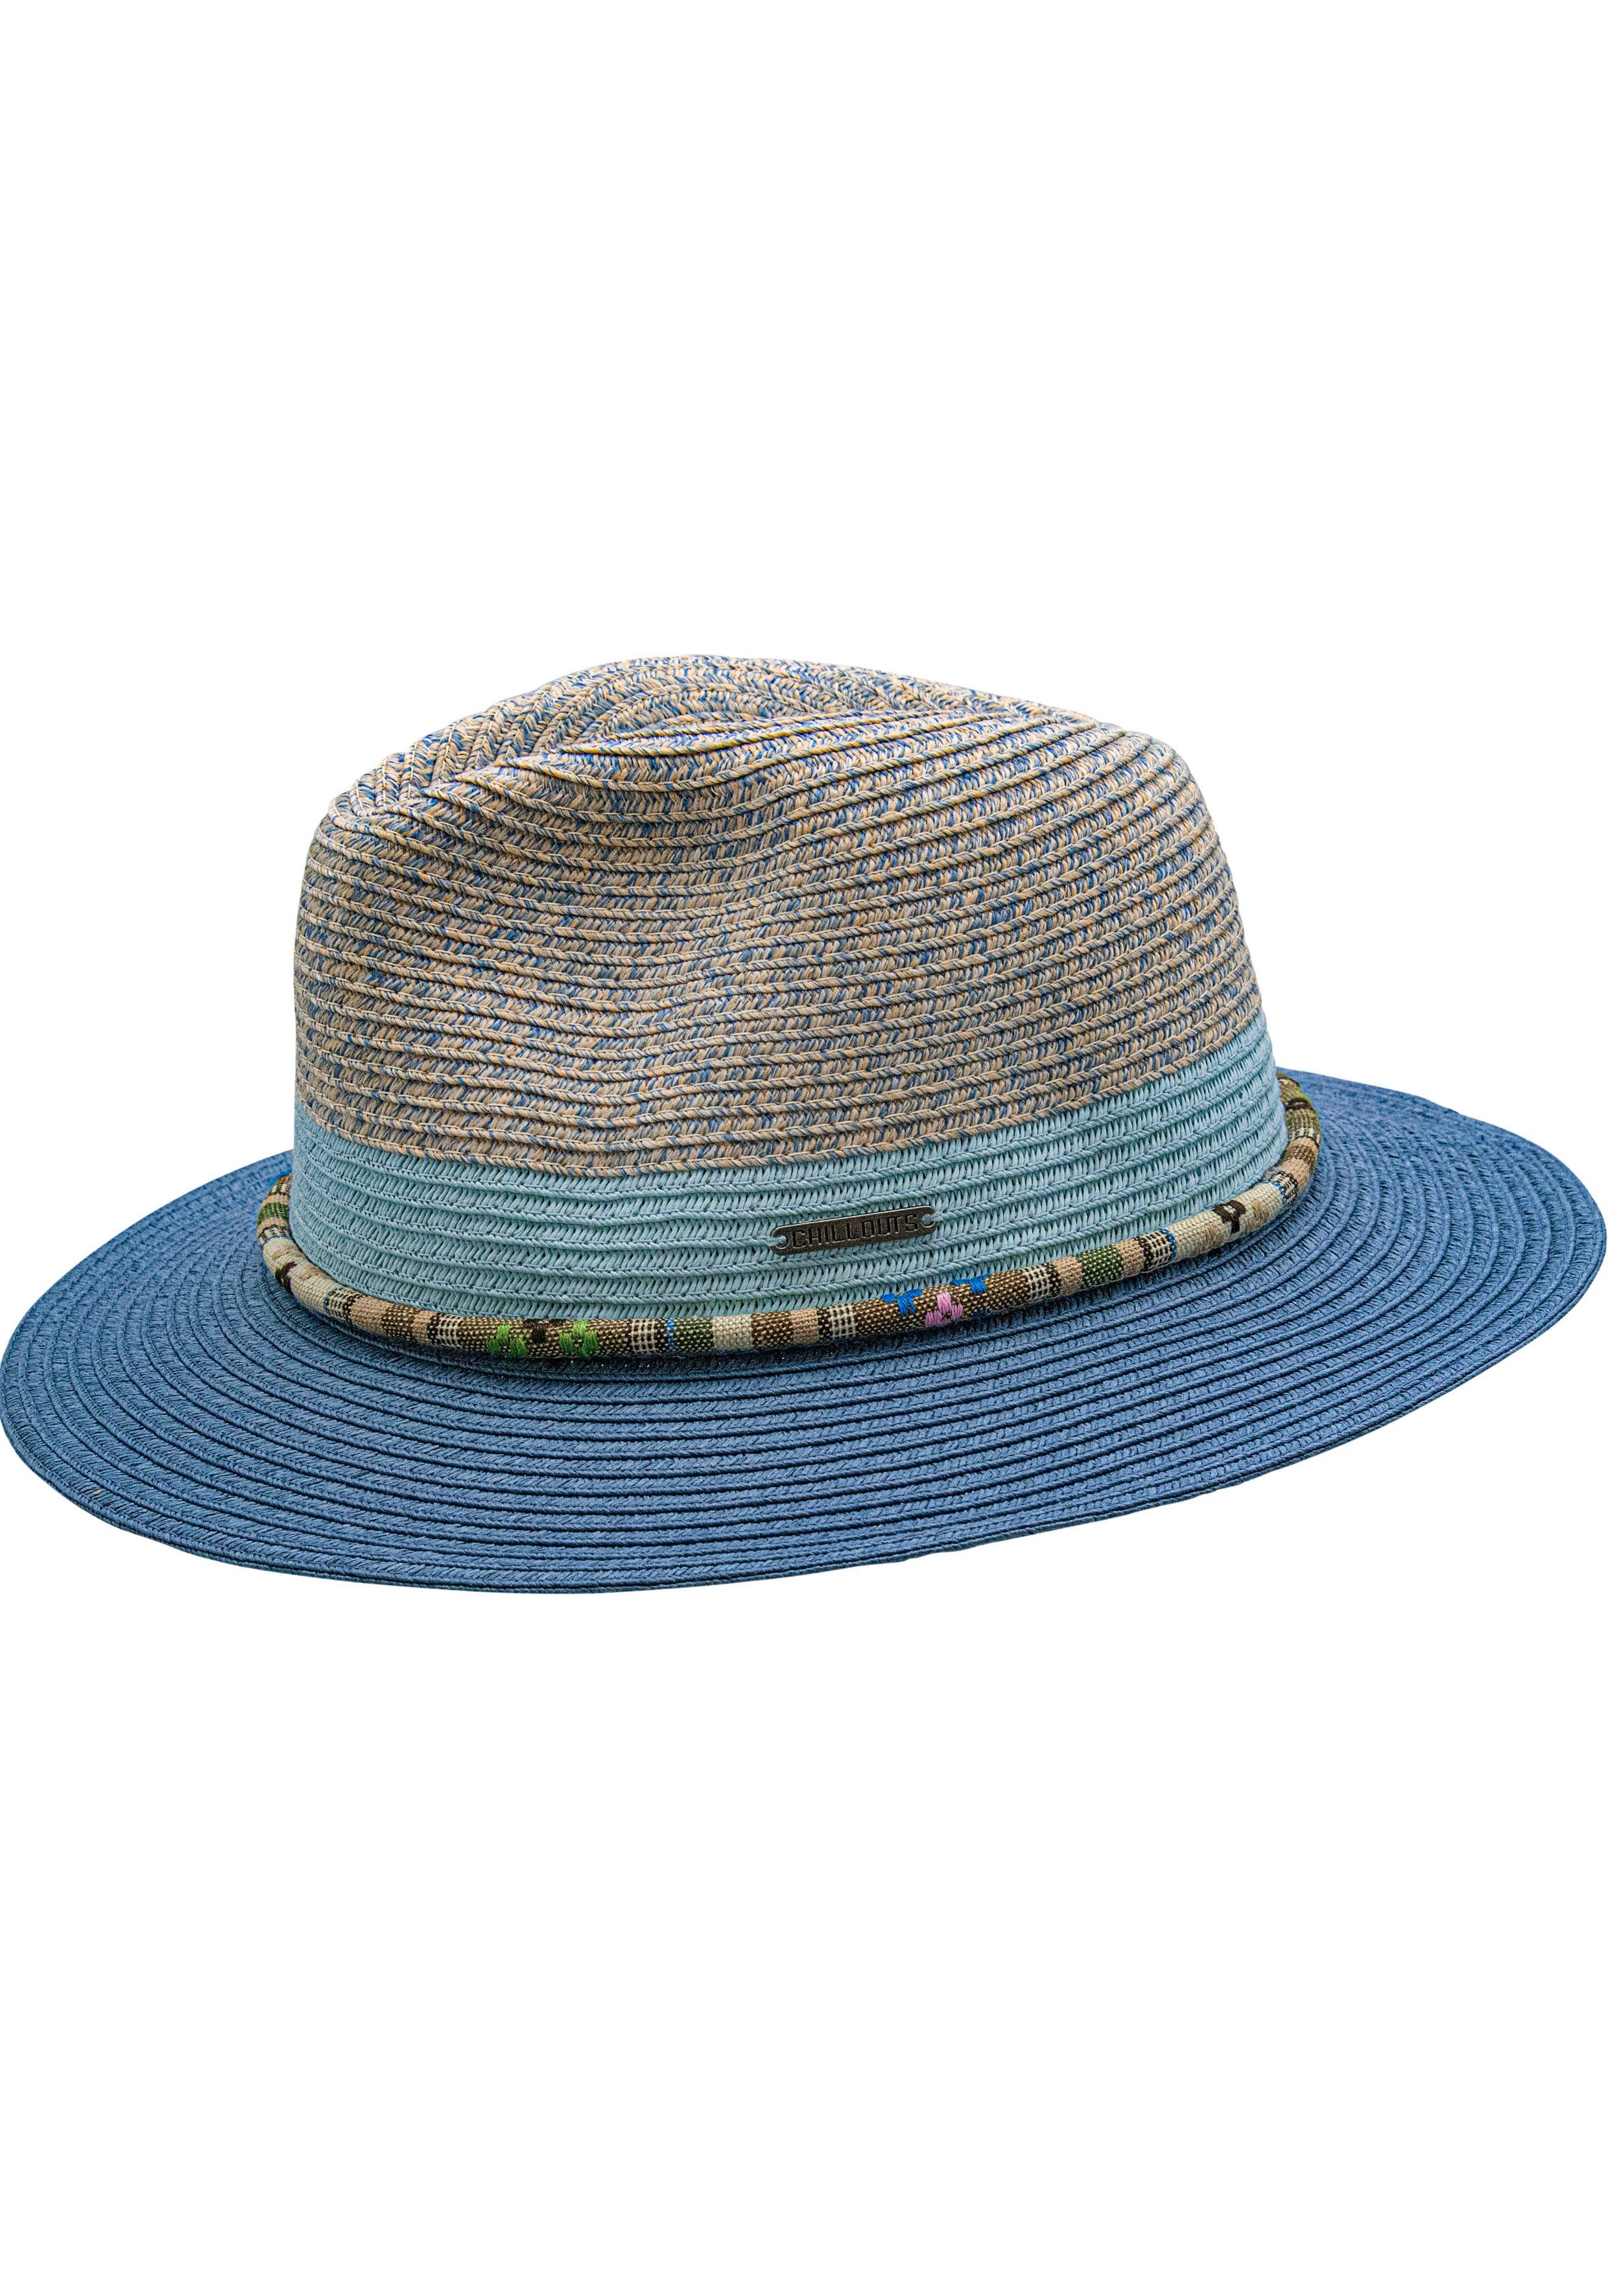 Garnitur bunter knautschbarer Montijo Hat, Chillouts chillouts Sonnenhut mit Papiertraveller